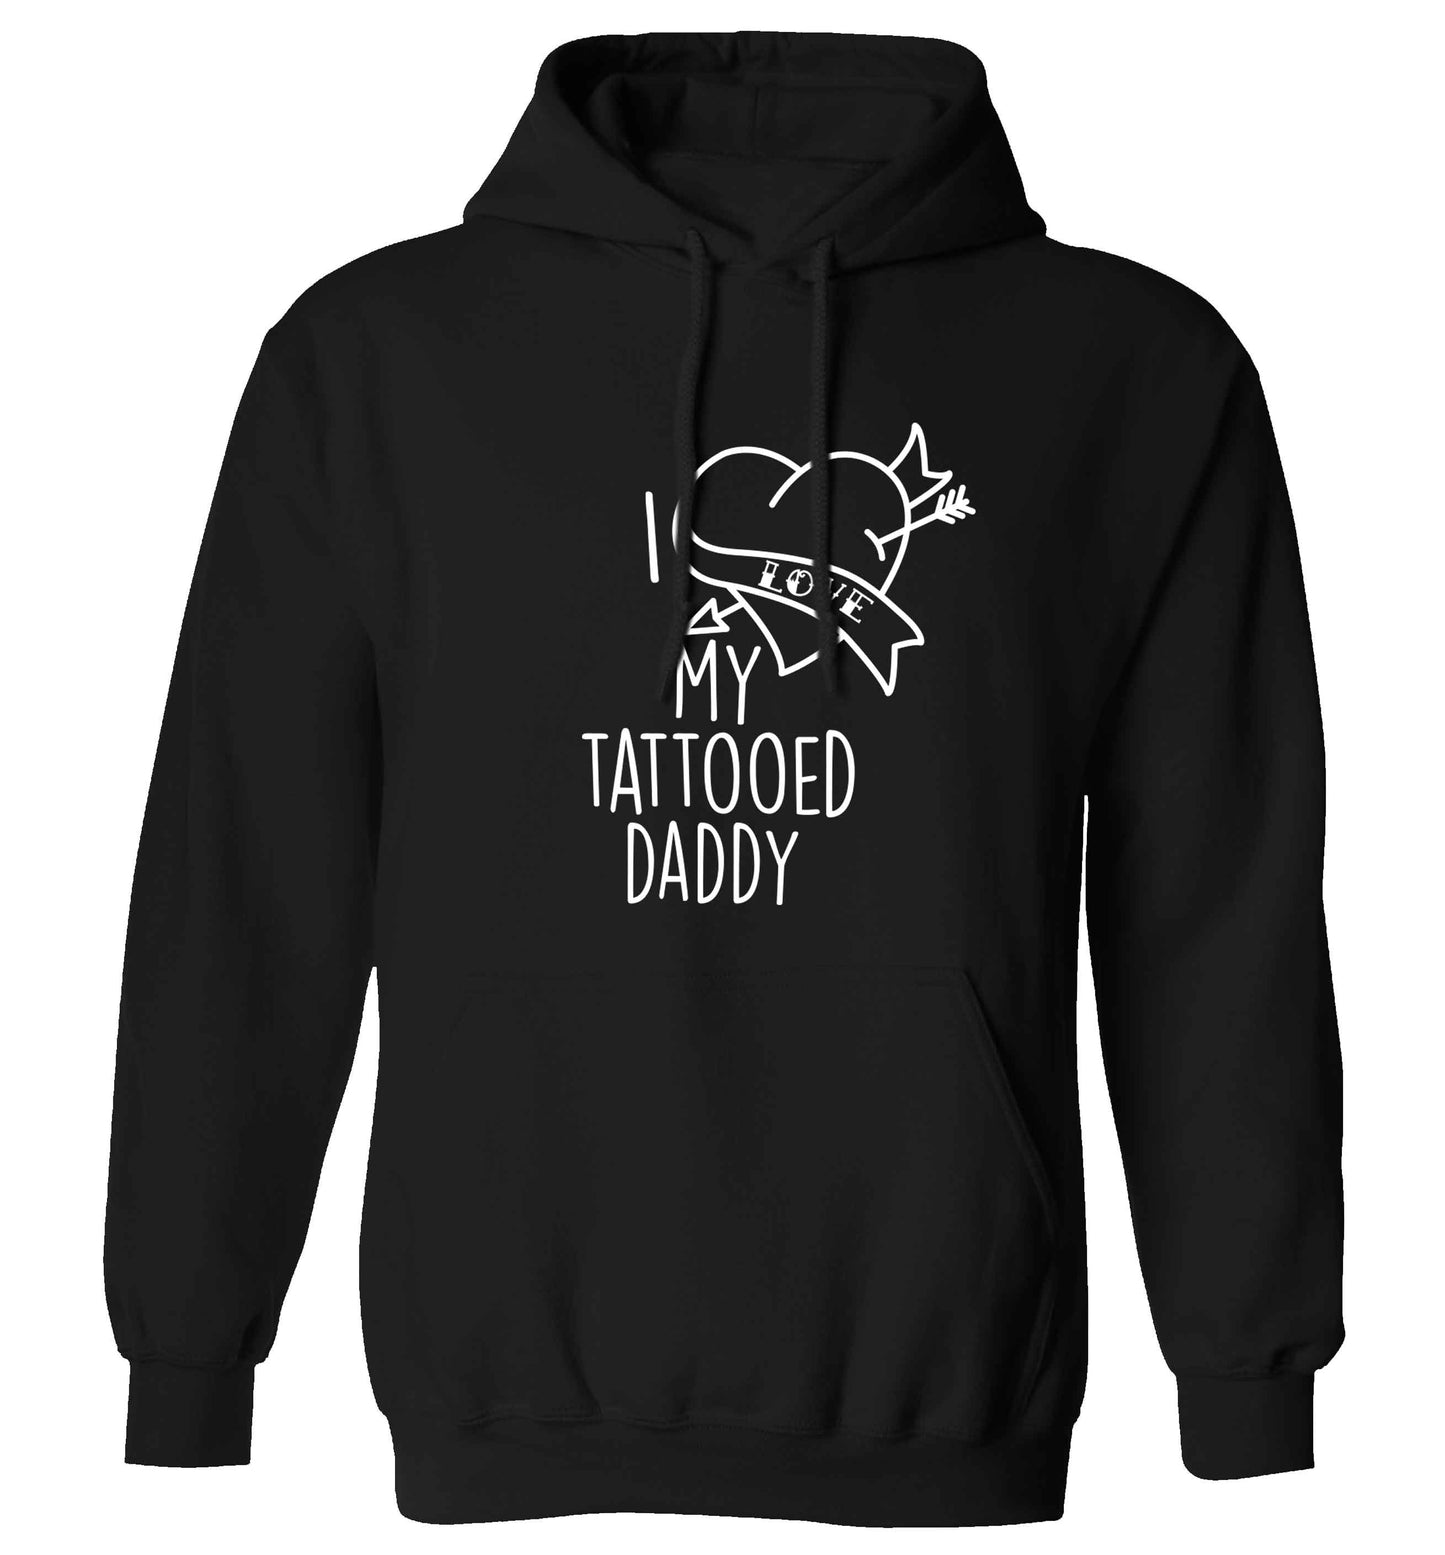 I love my tattooed daddy adults unisex black hoodie 2XL